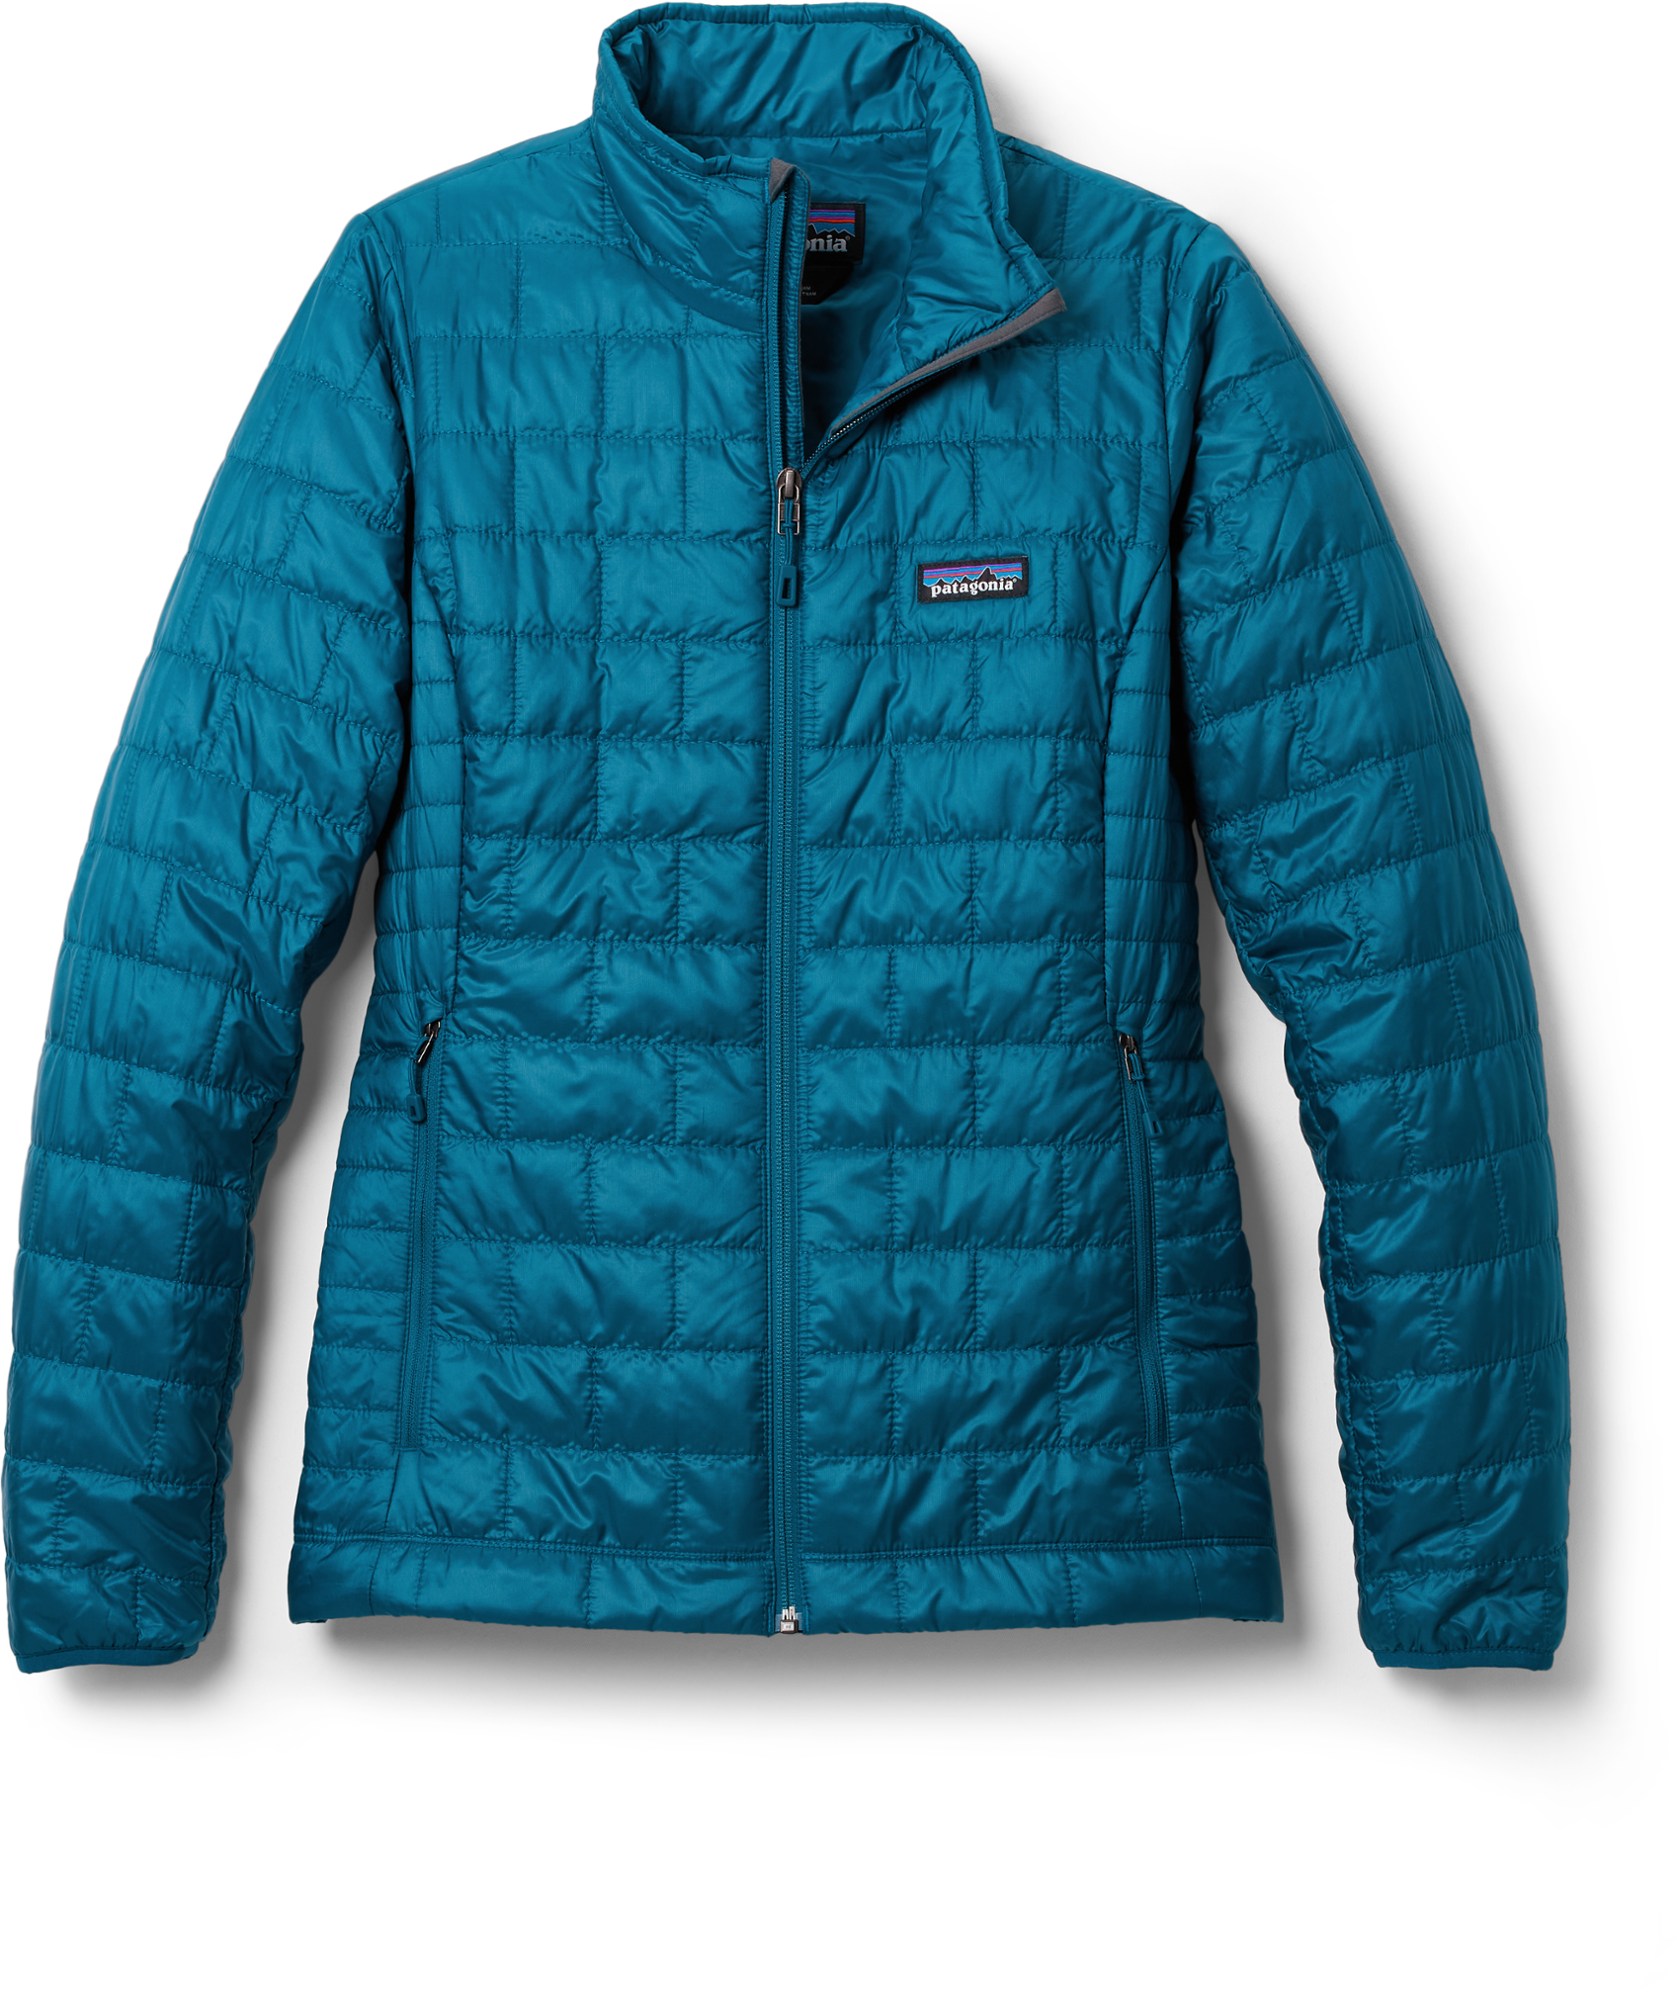 Куртка-пуховик Nano - женская Patagonia, синий цена и фото